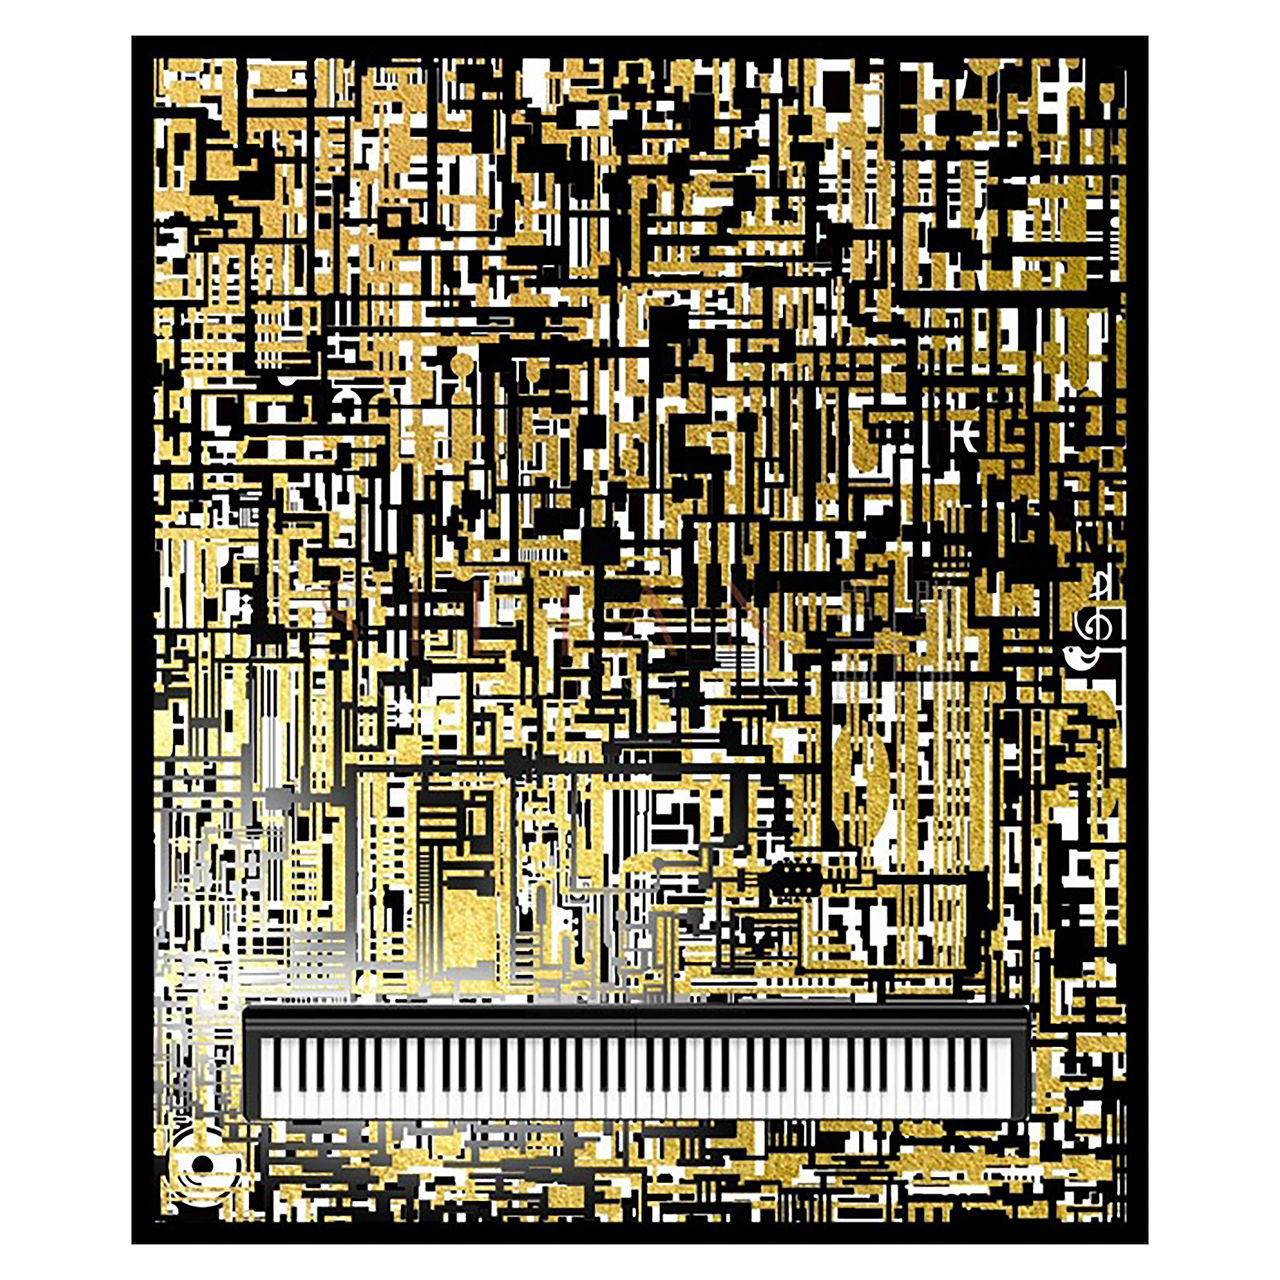 Wall art Piano Wibi (Black/gold)